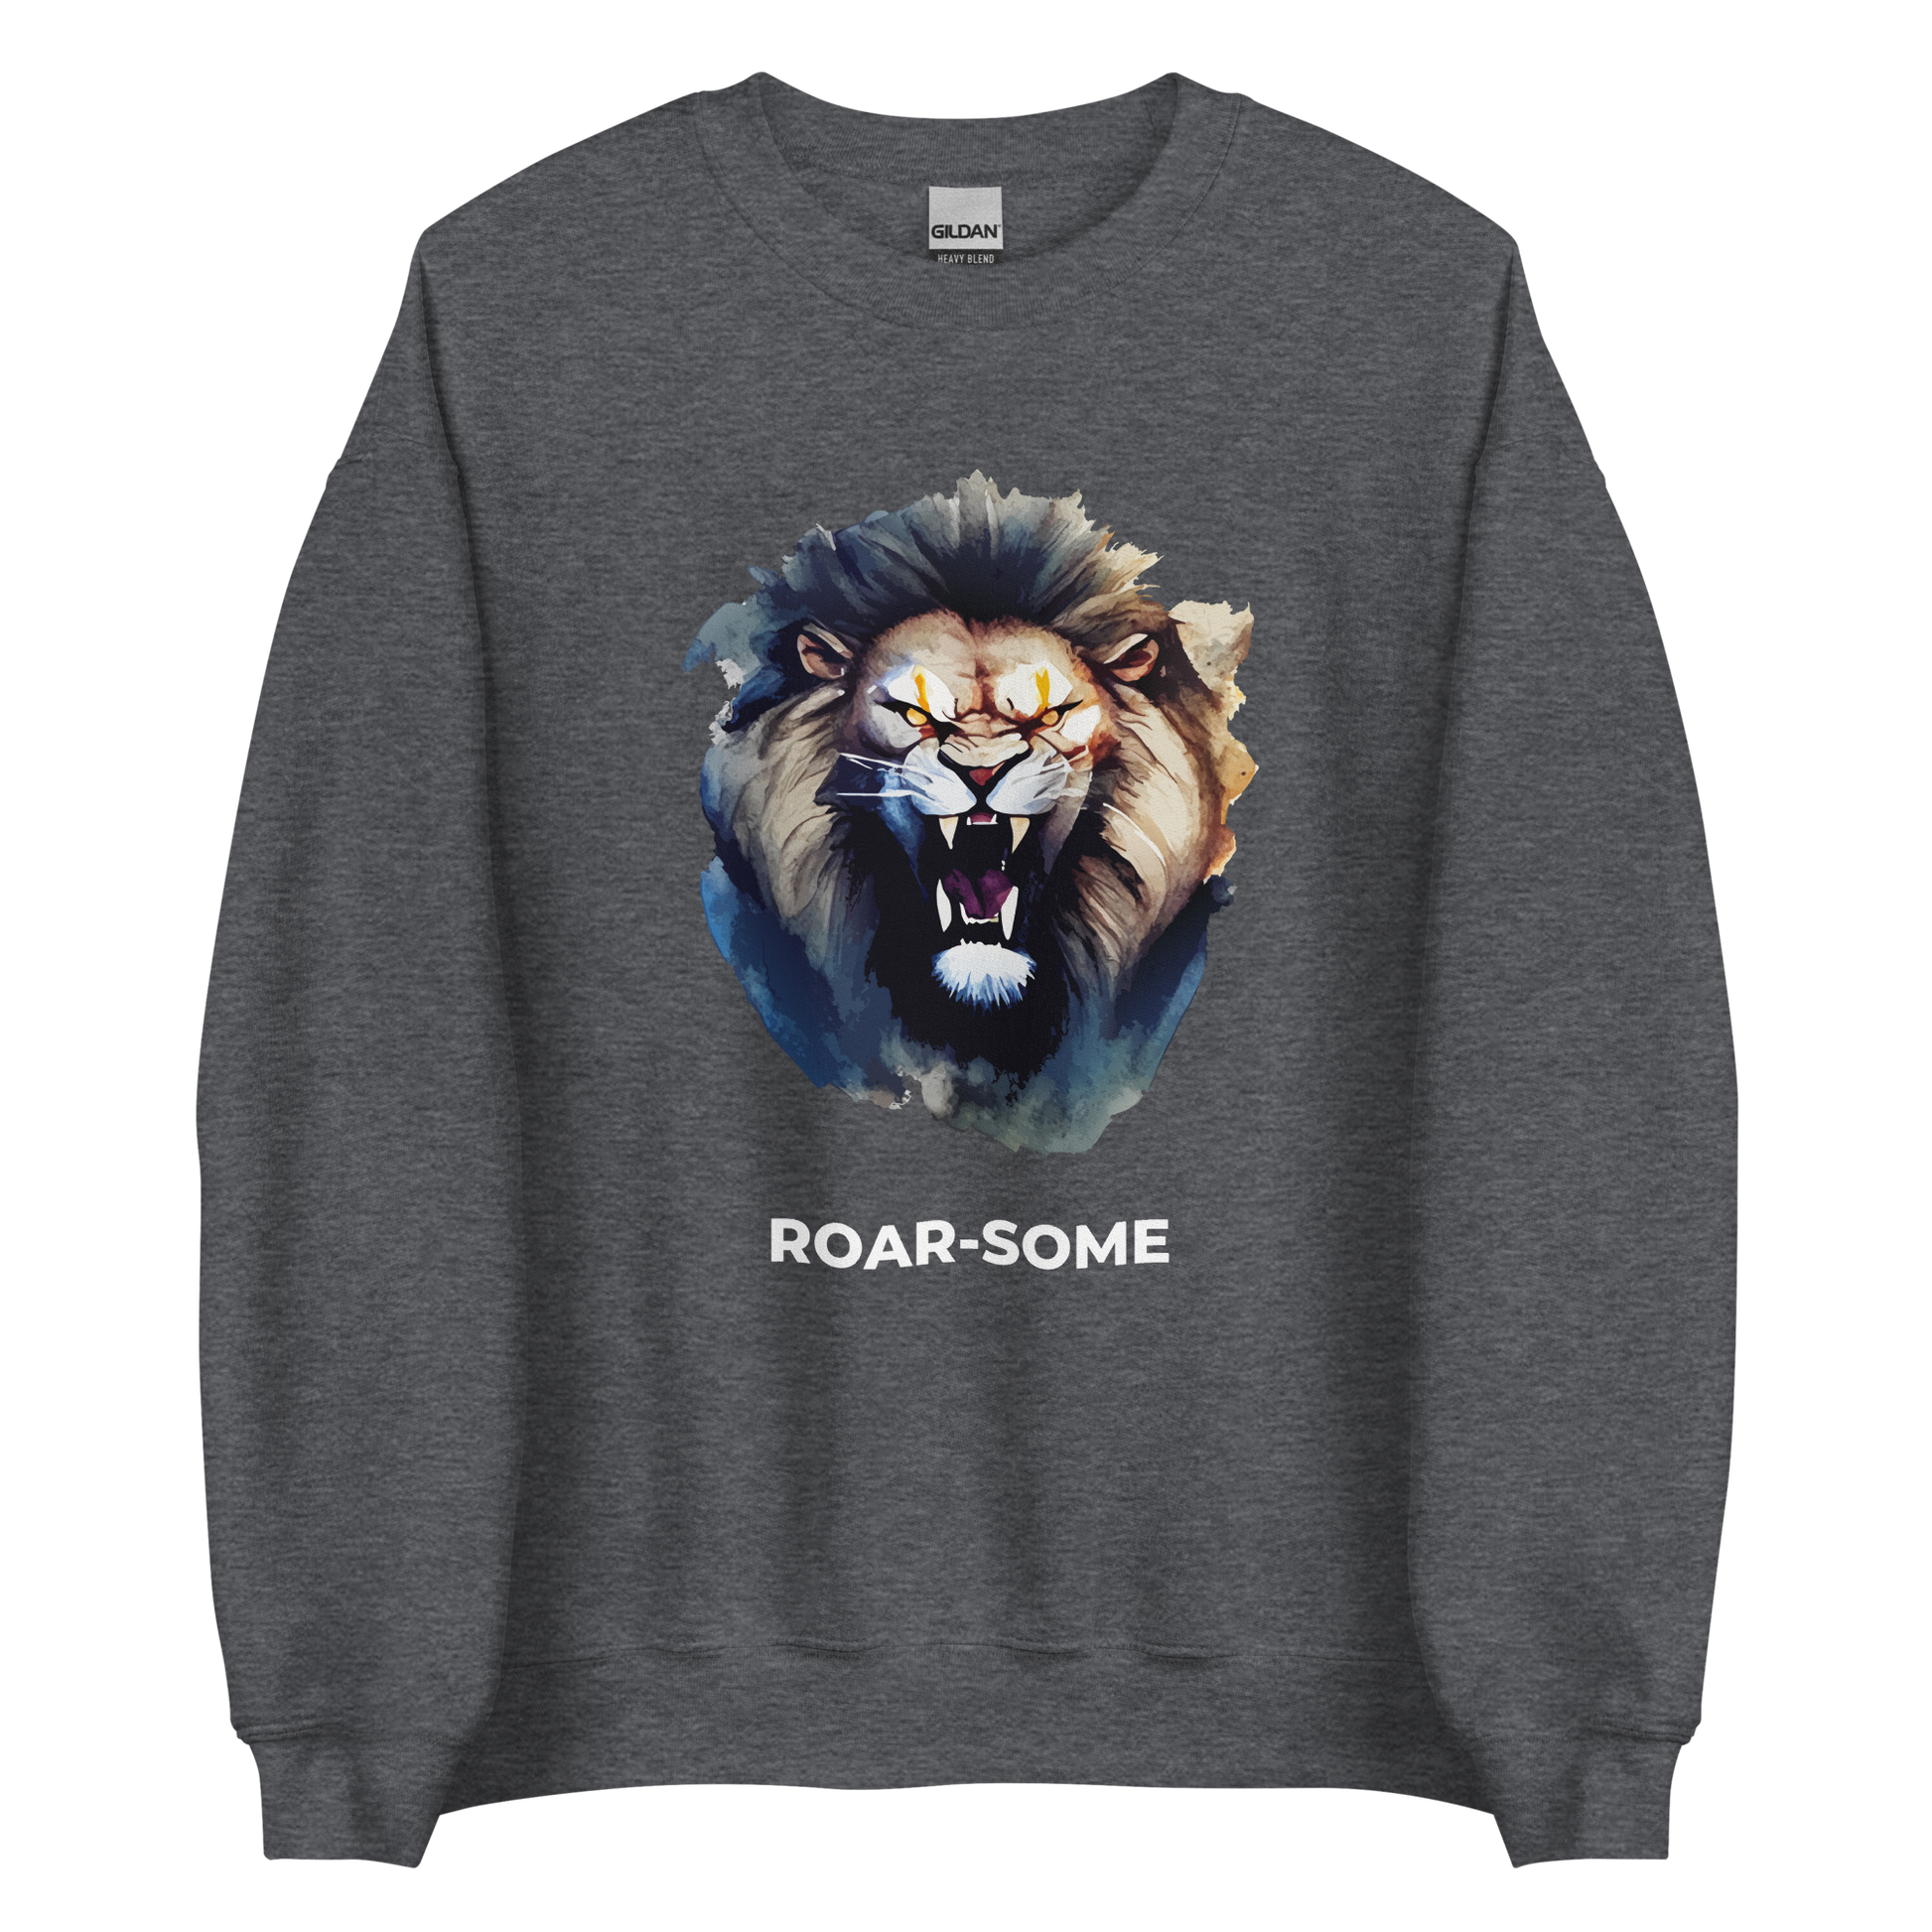 Dark Heather Lion Sweatshirt featuring a Roar-Some graphic on the chest - Cool Graphic Lion Sweatshirts - Boozy Fox